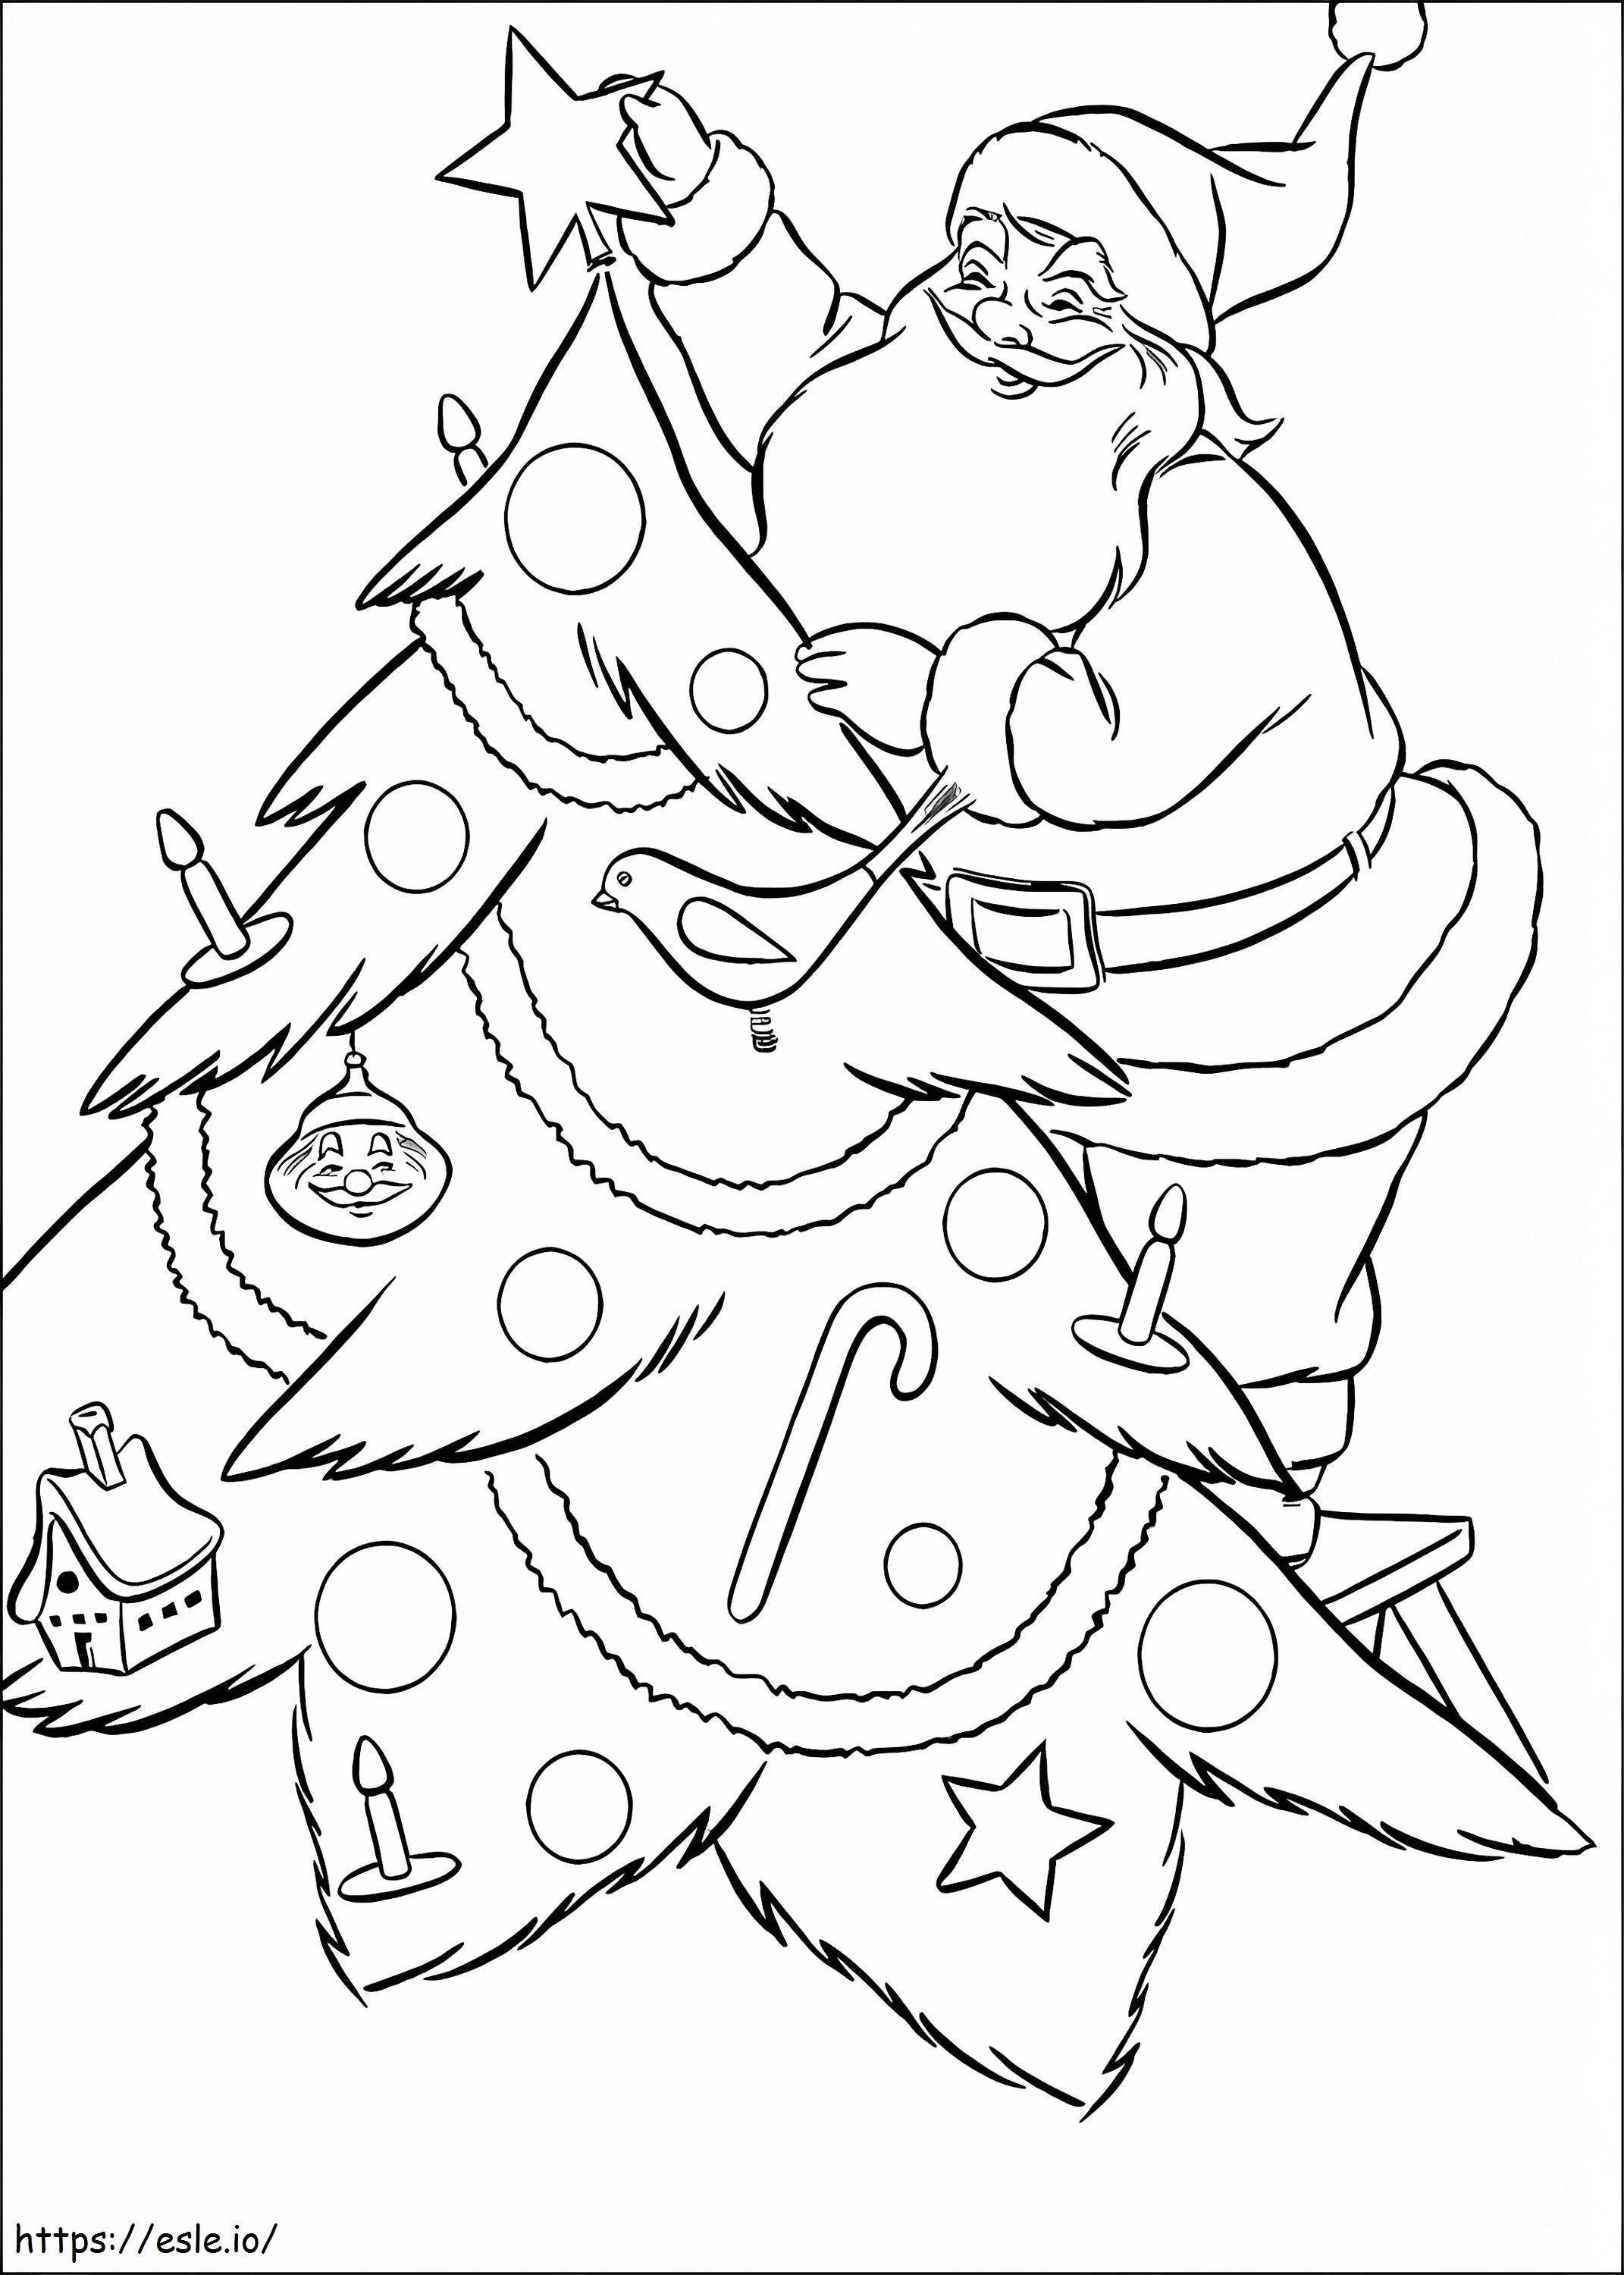 1534391730 Santa Claus Decorating A4 coloring page